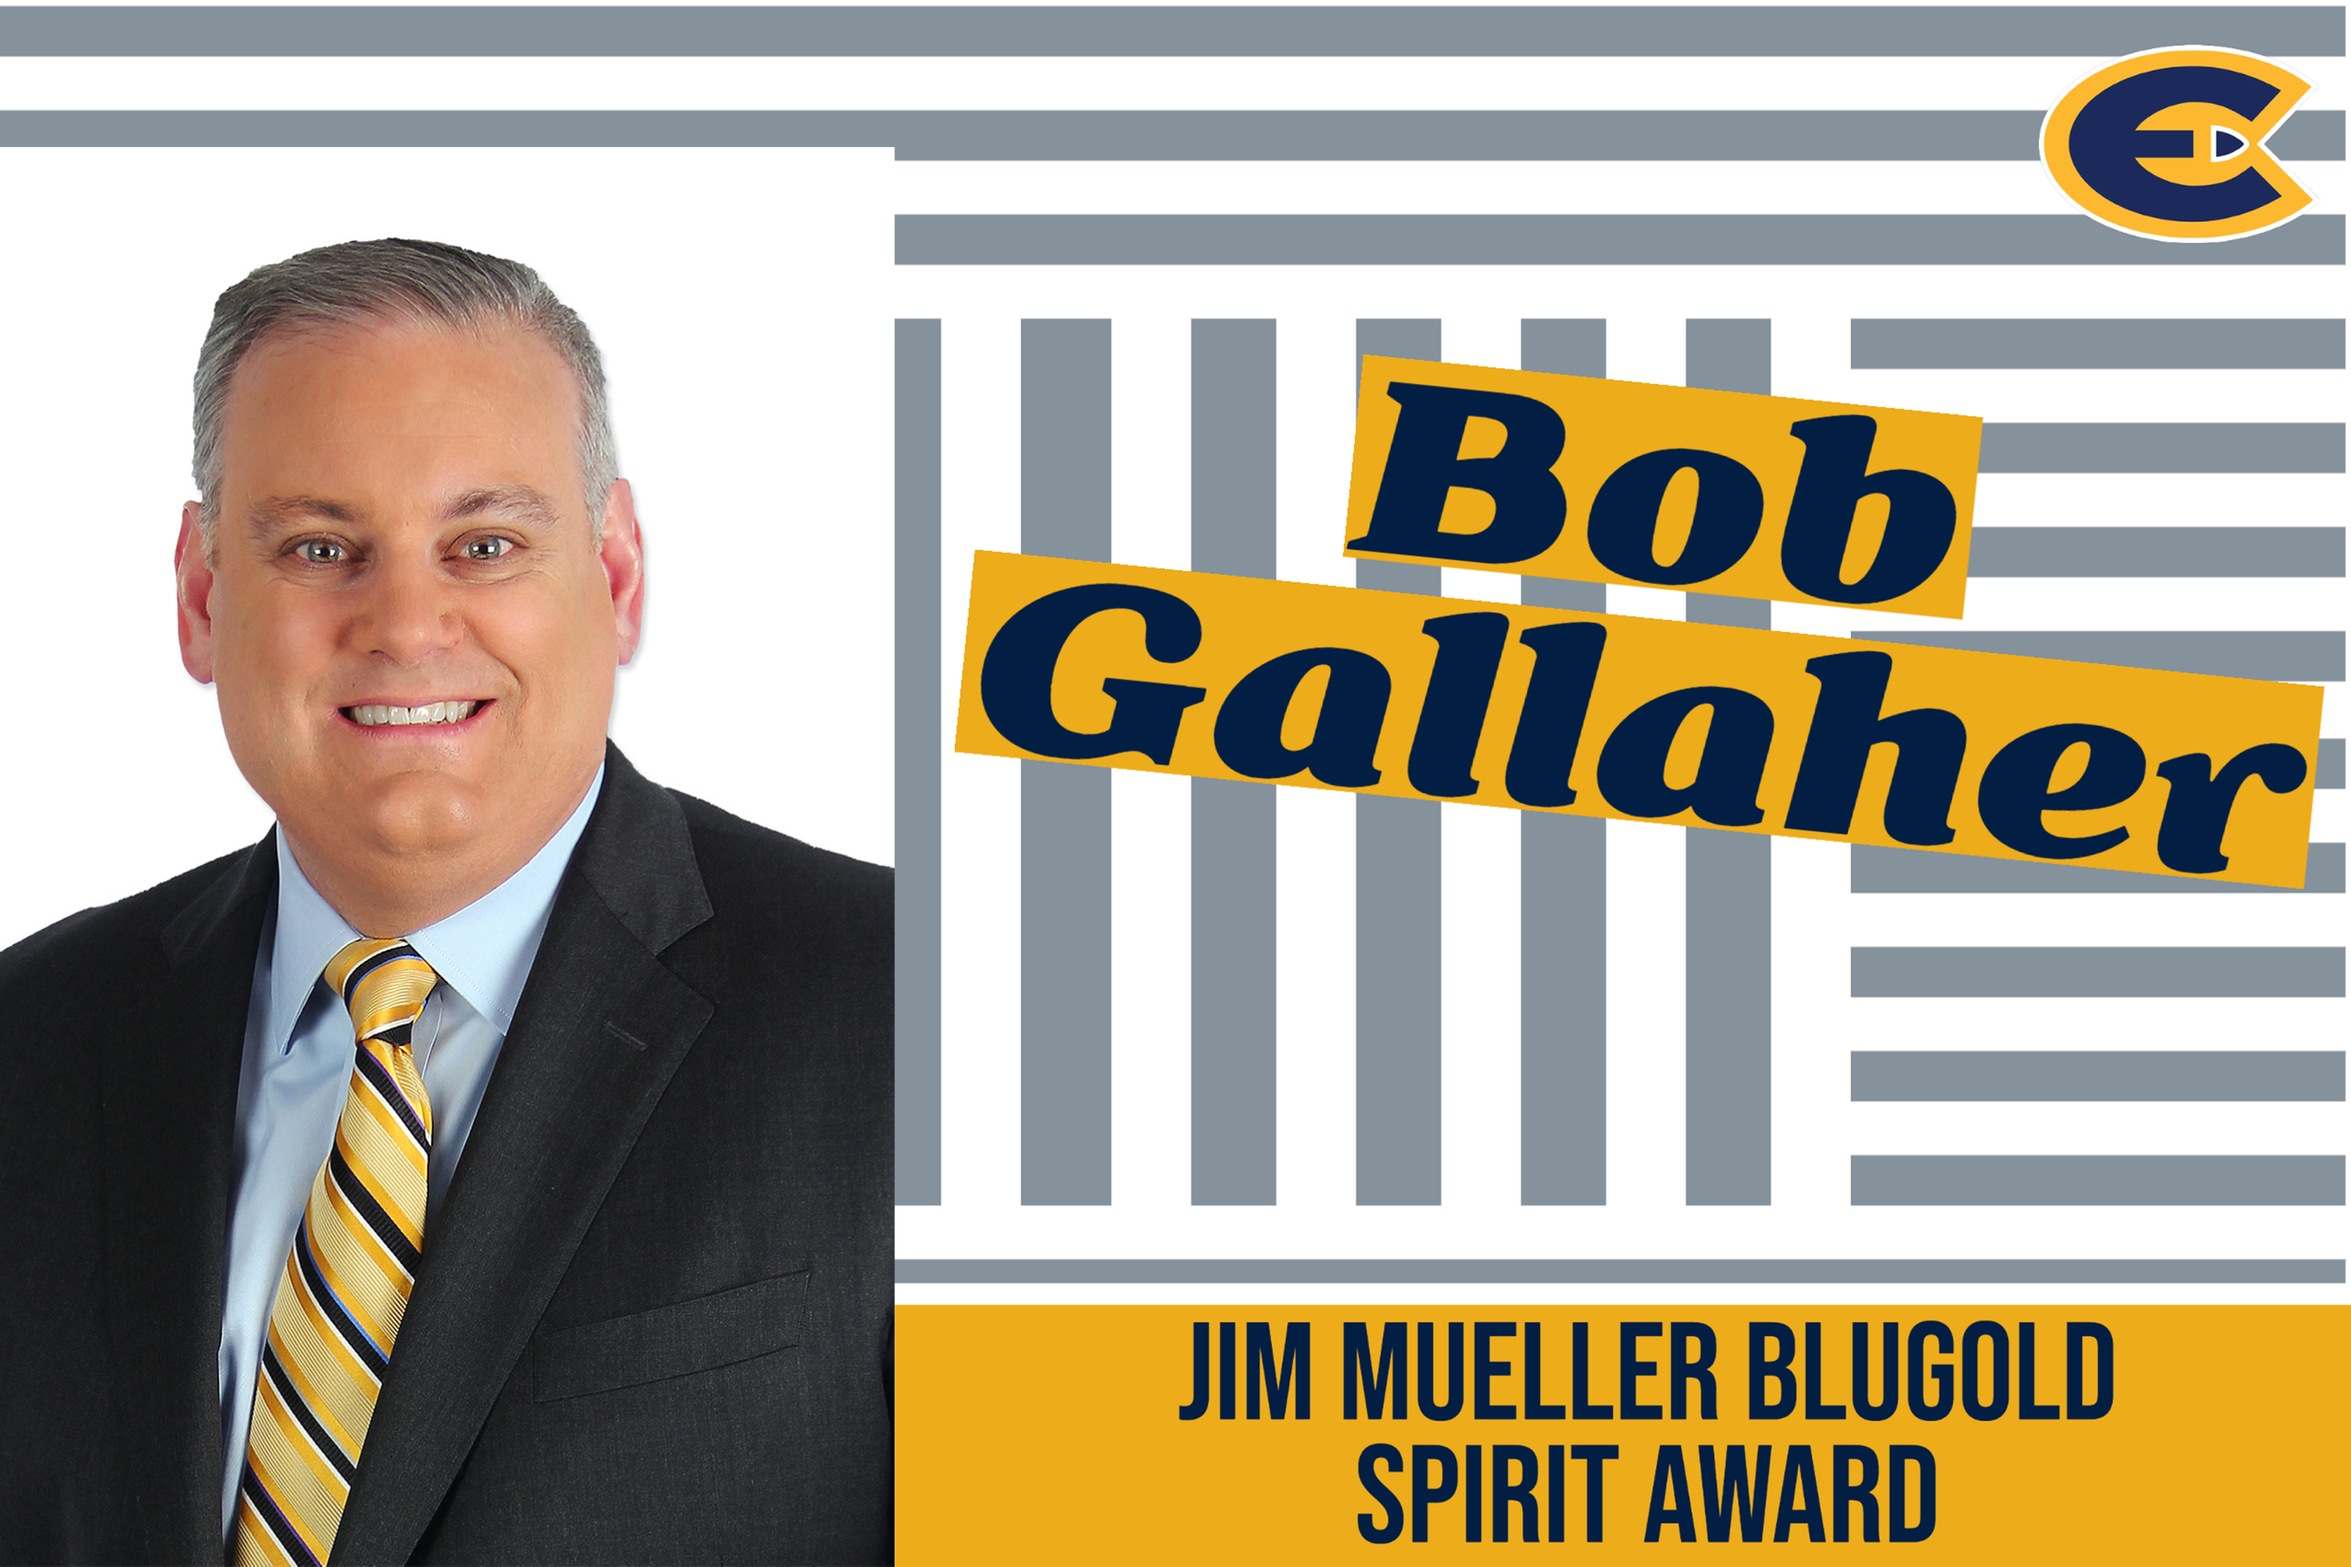 Bob Gallaher Receives Jim Mueller Blugold Spirit Award